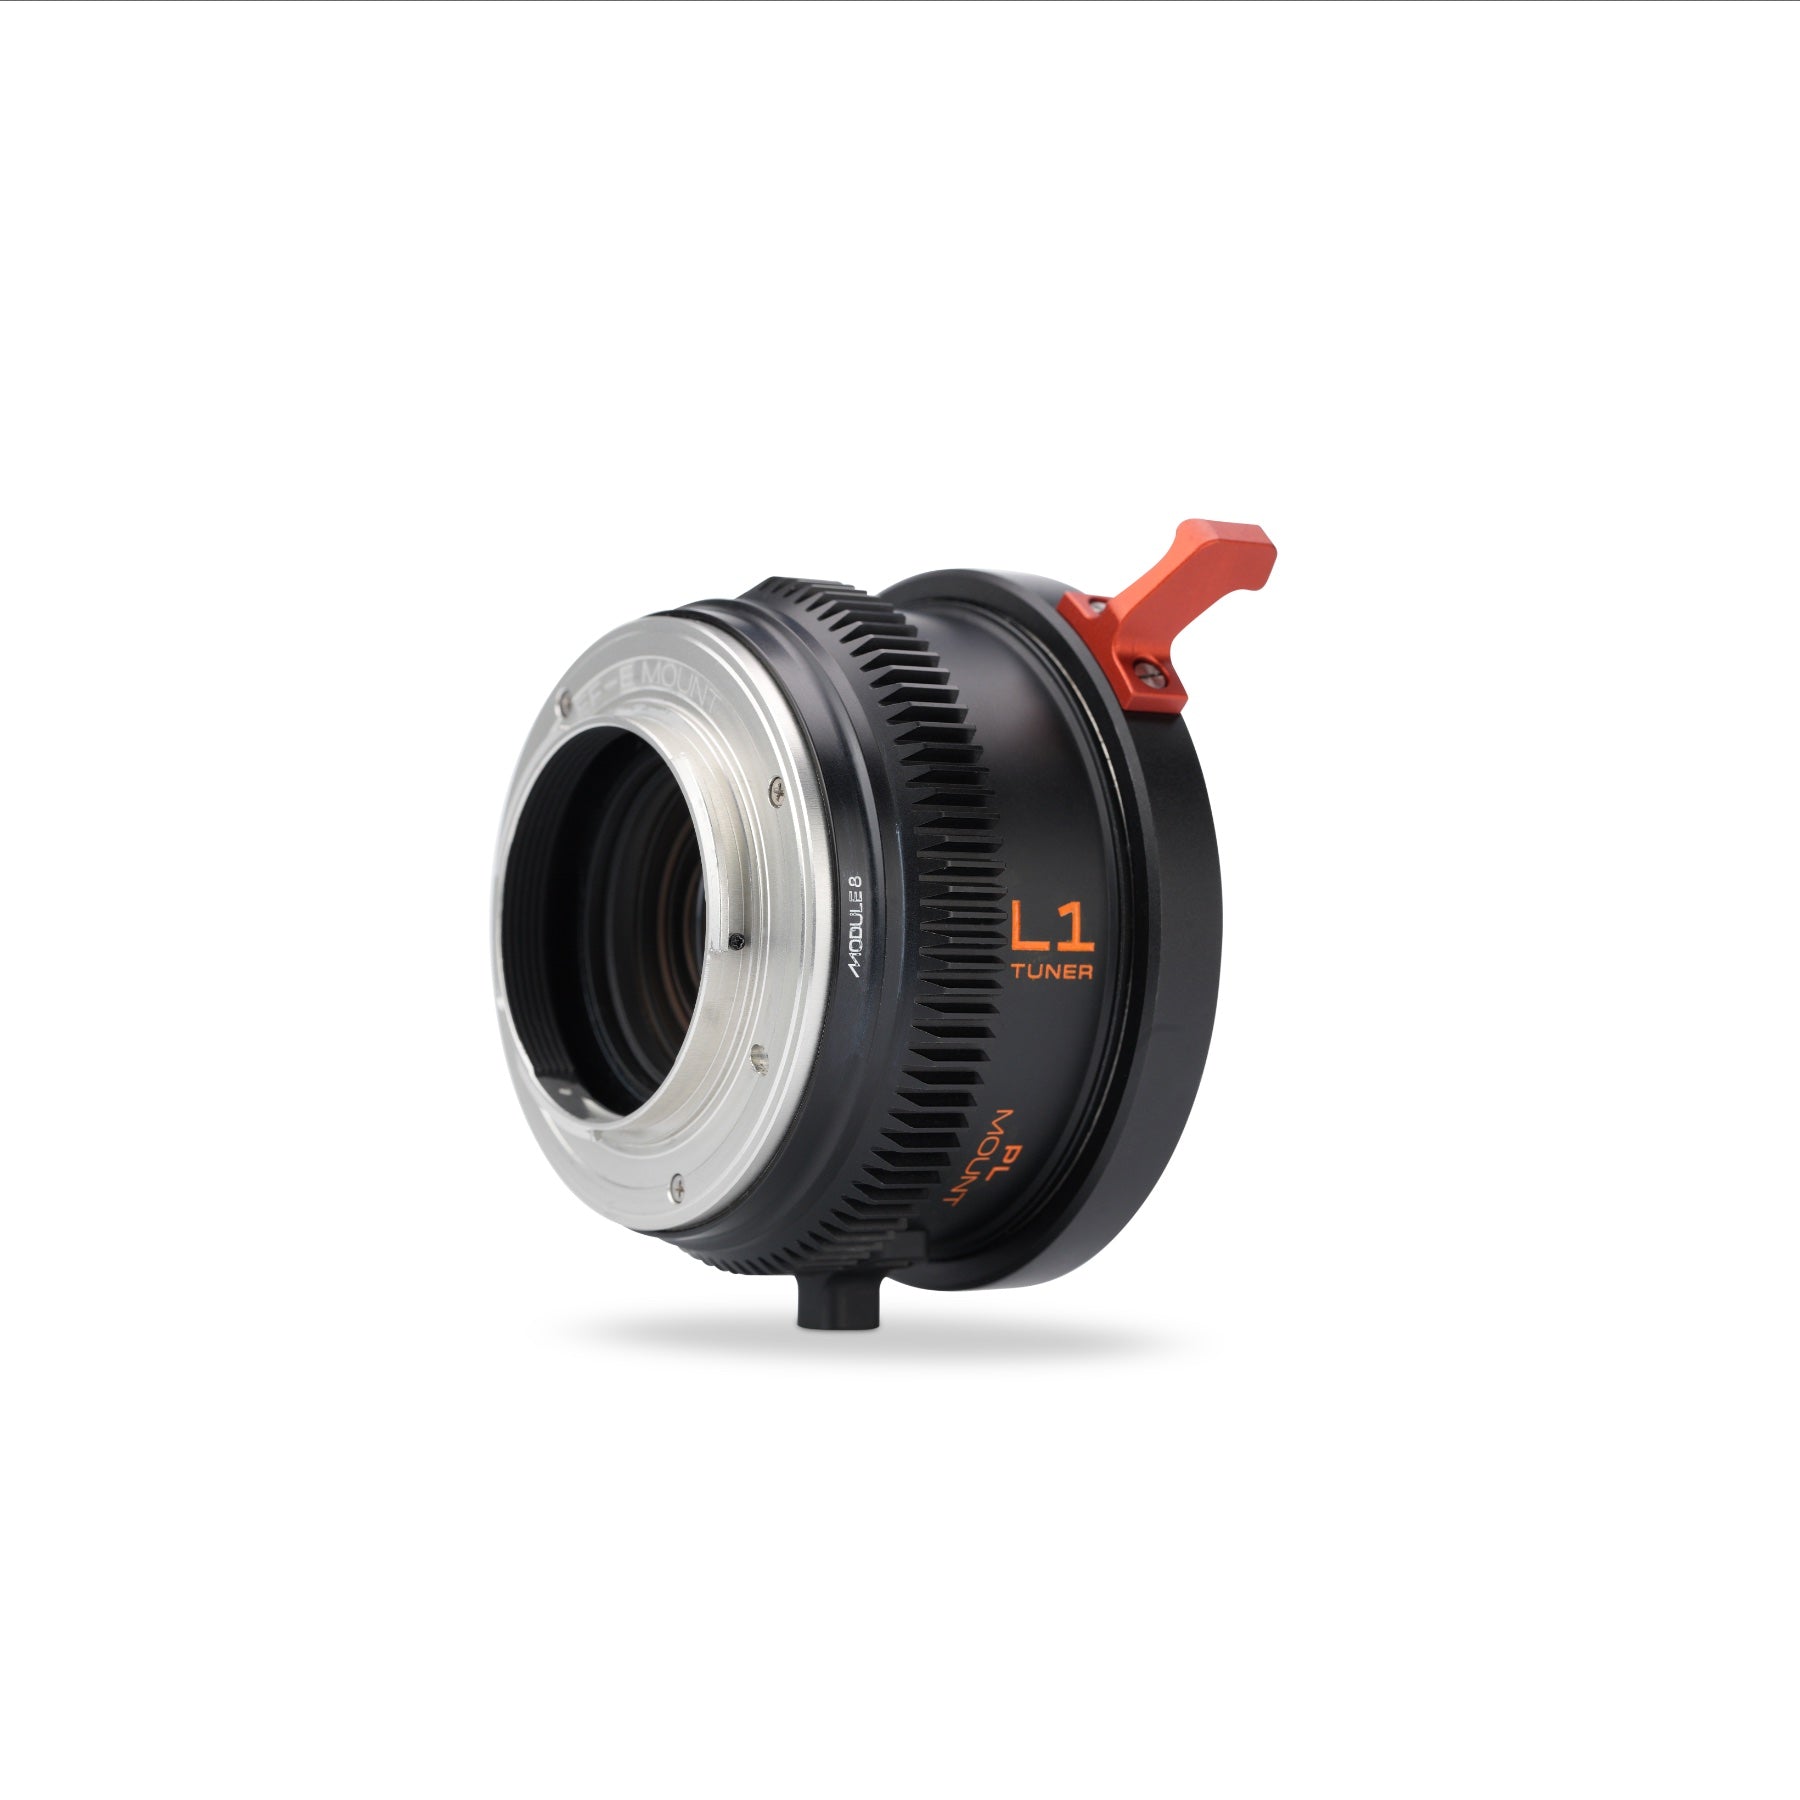 L1 Tuner - Baltar Variable Look Lens